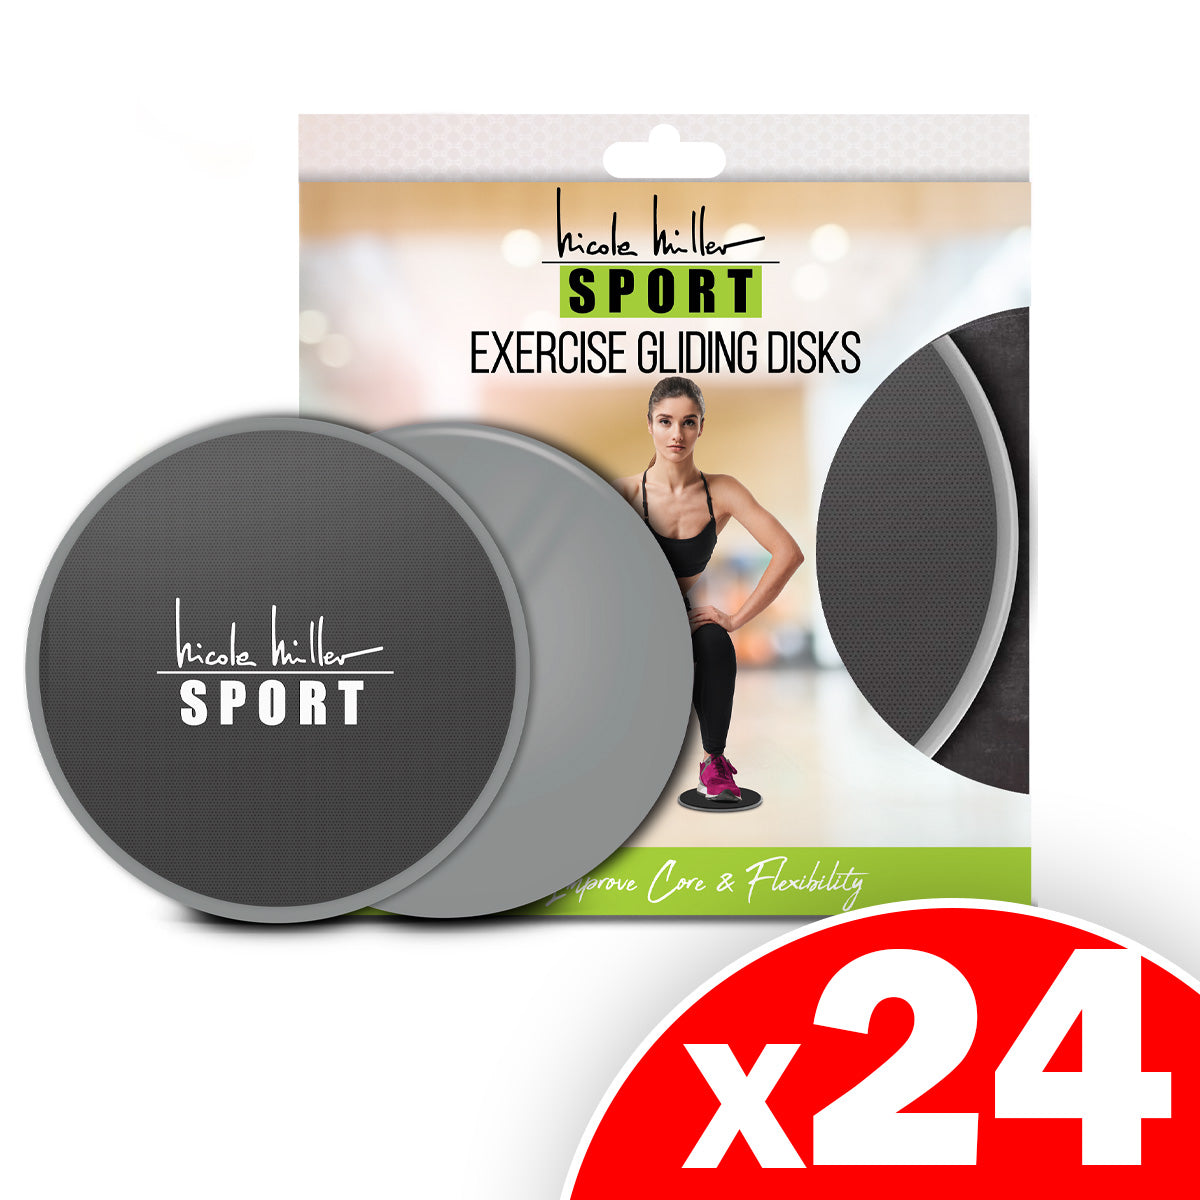 Nicole Miller Sport Exercise Gliding Discs, 24 Packs of 2